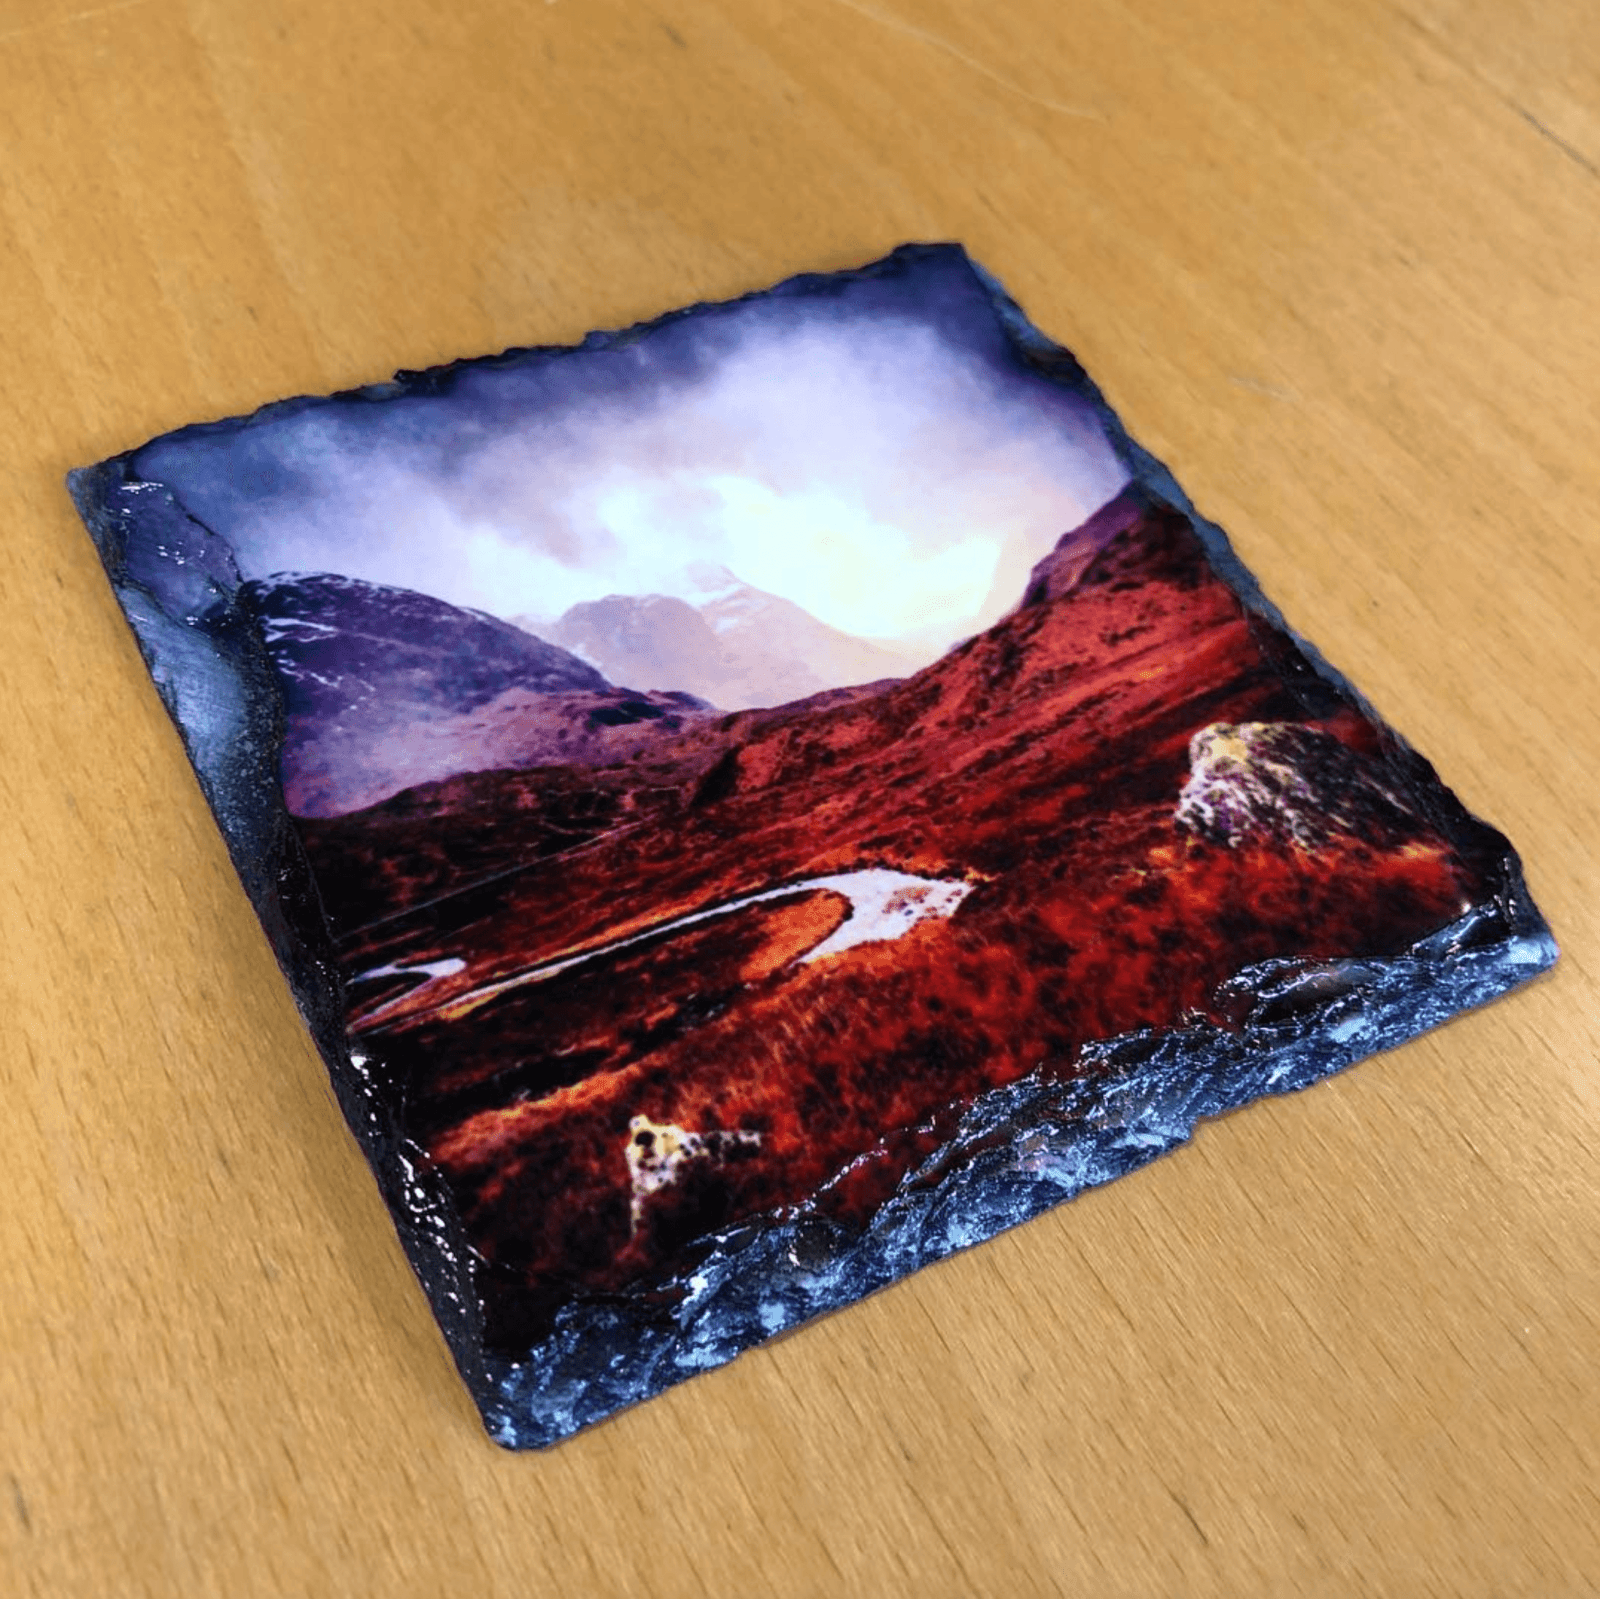 The Sleeping Warrior Arran Scottish Slate Art-Slate Art-Arran Art Gallery-Paintings, Prints, Homeware, Art Gifts From Scotland By Scottish Artist Kevin Hunter